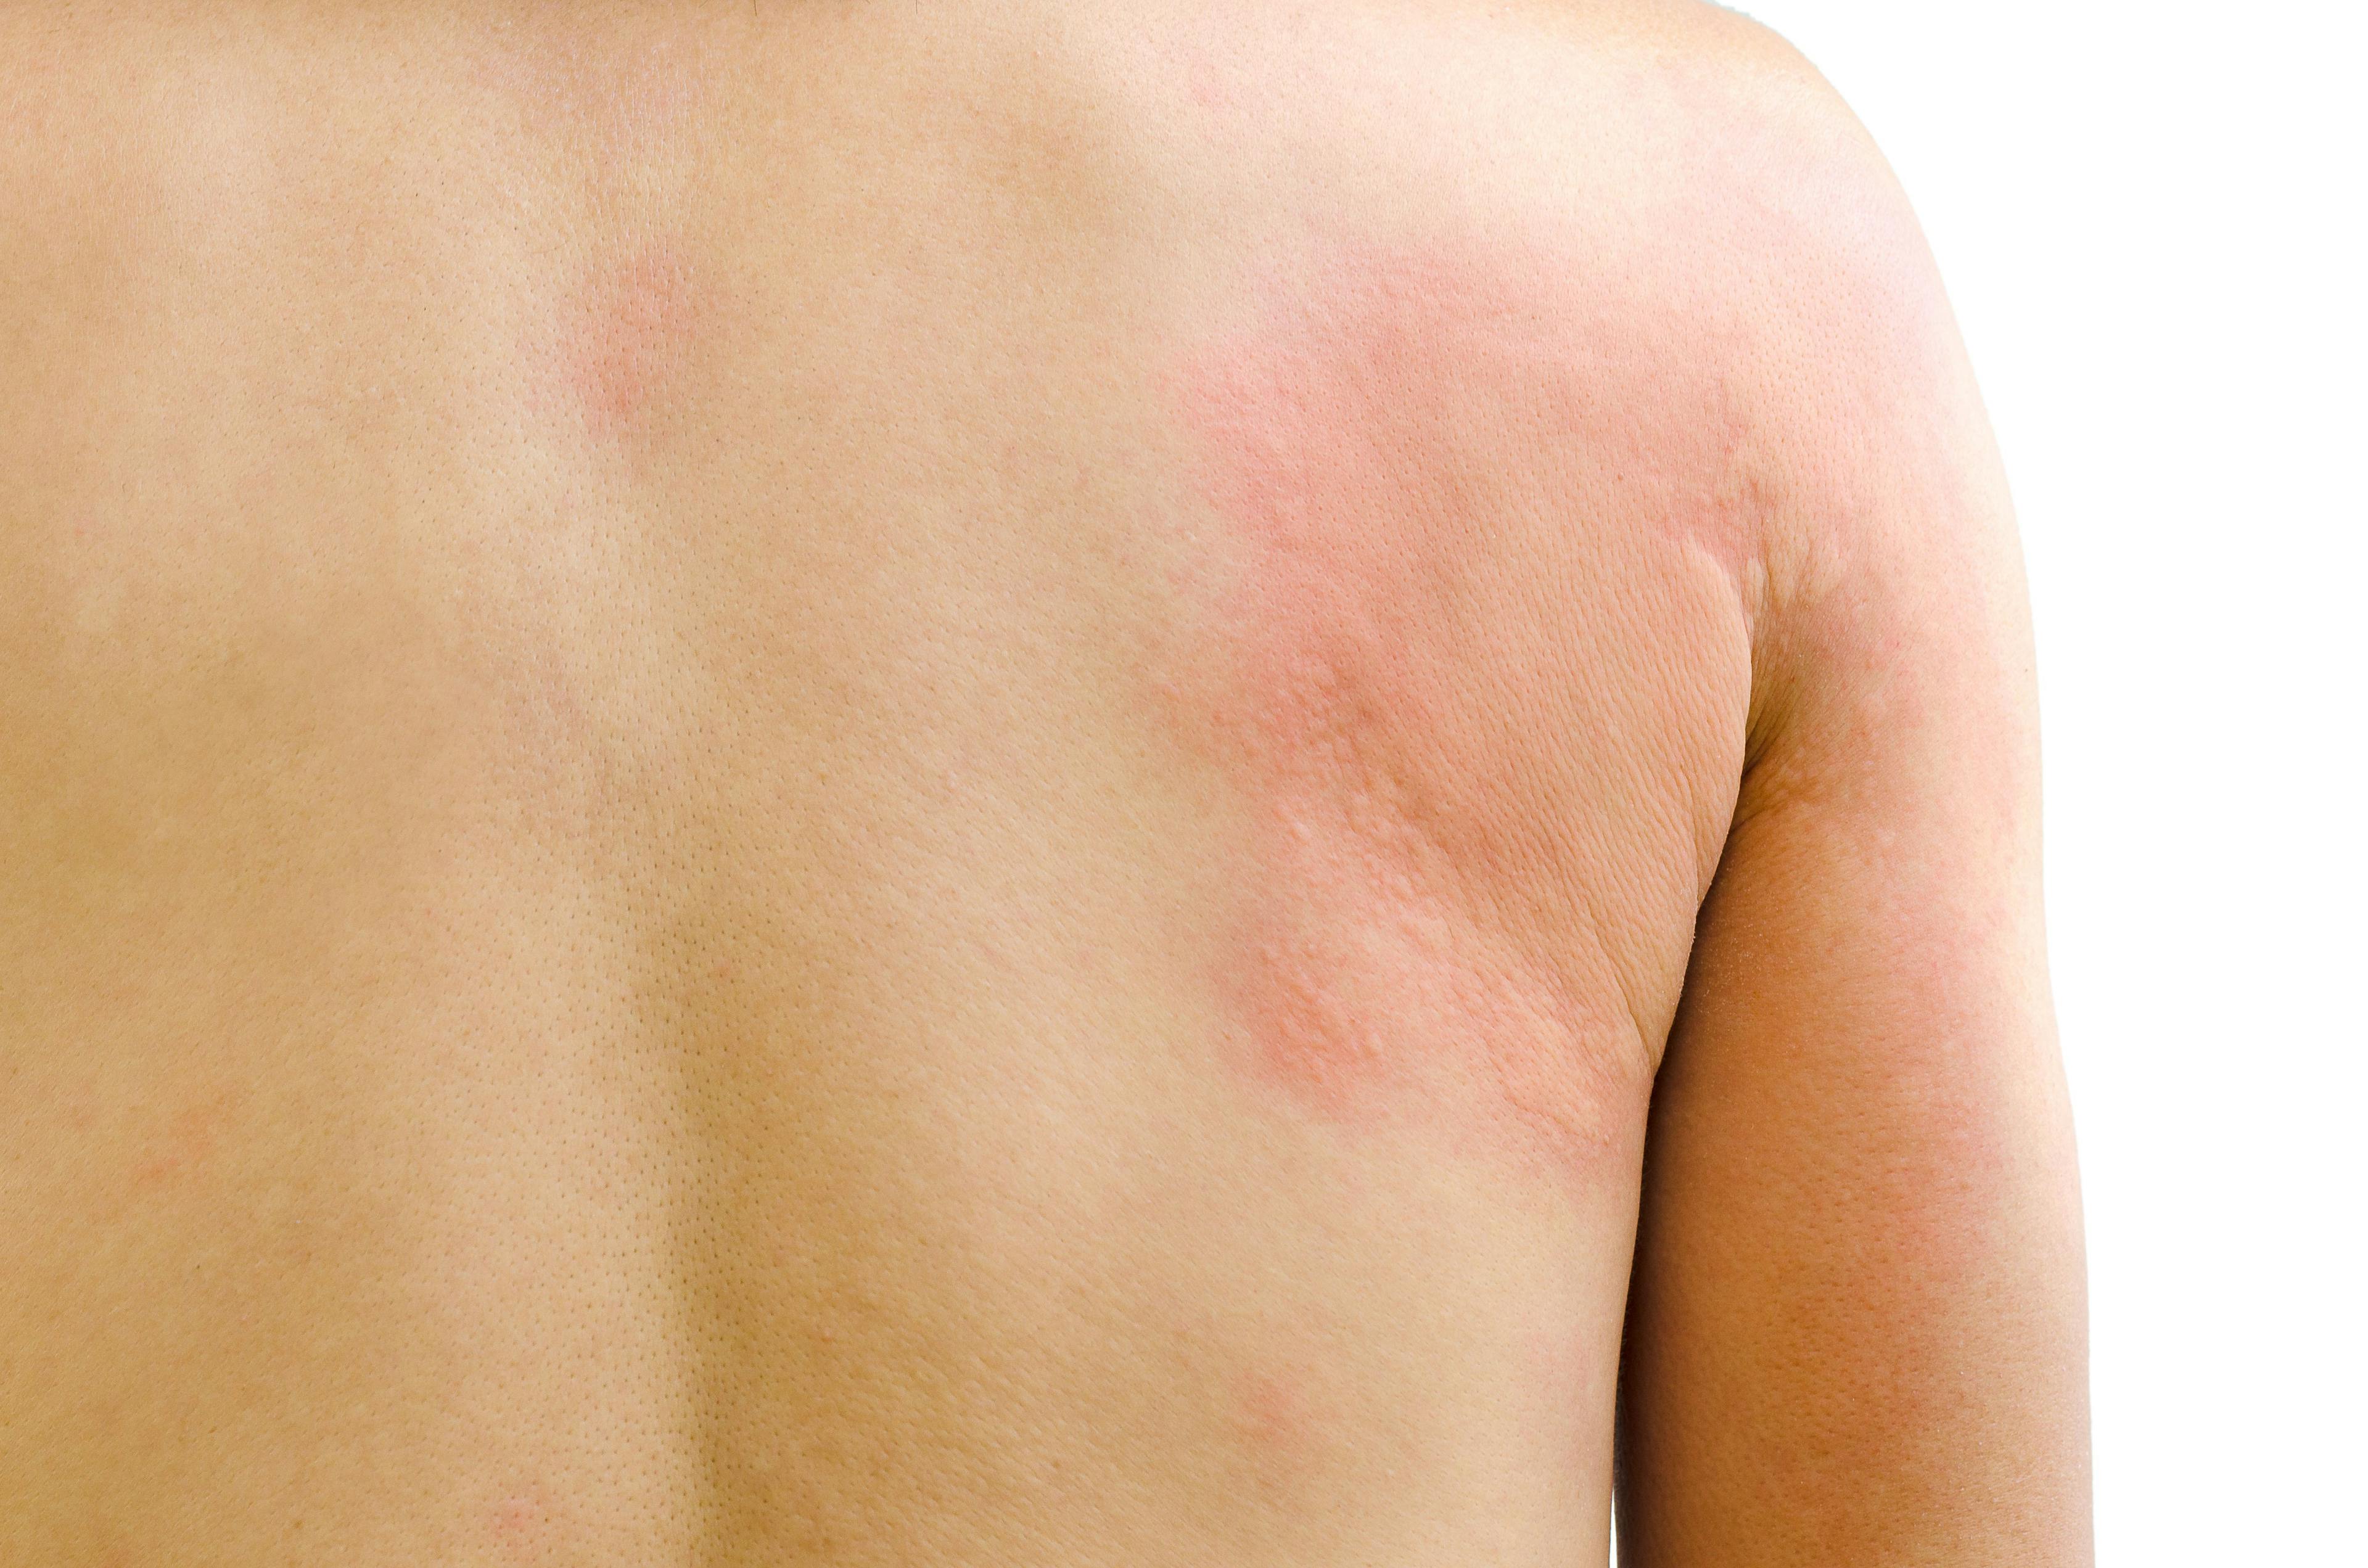 Urticaria on the back of a patient's shoulder/upper arm region